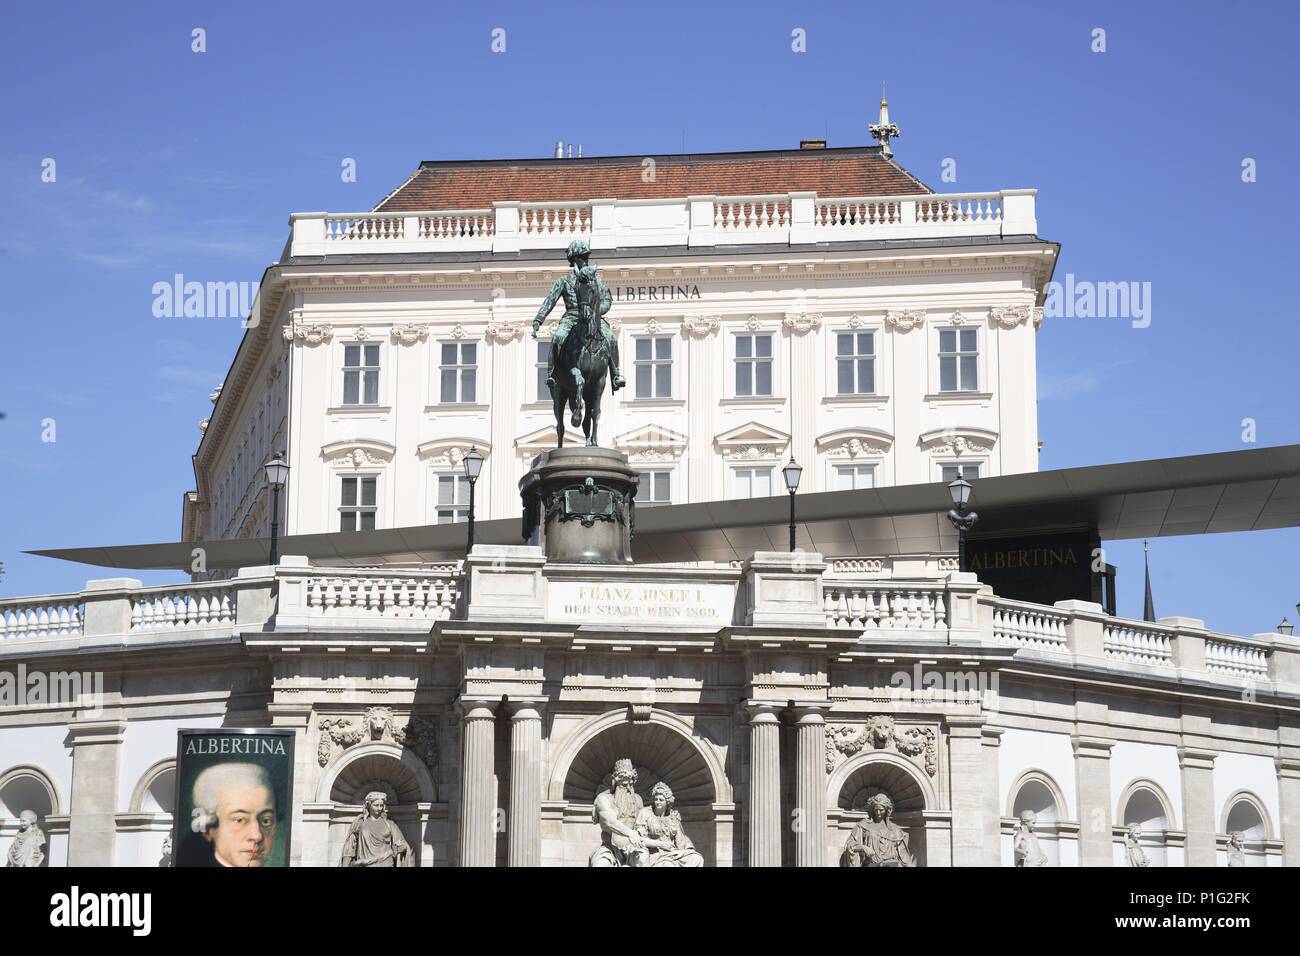 . Viena / Wien; la 'Albertina' con estatua del duque Alberto de Sajonia. Stock Photo